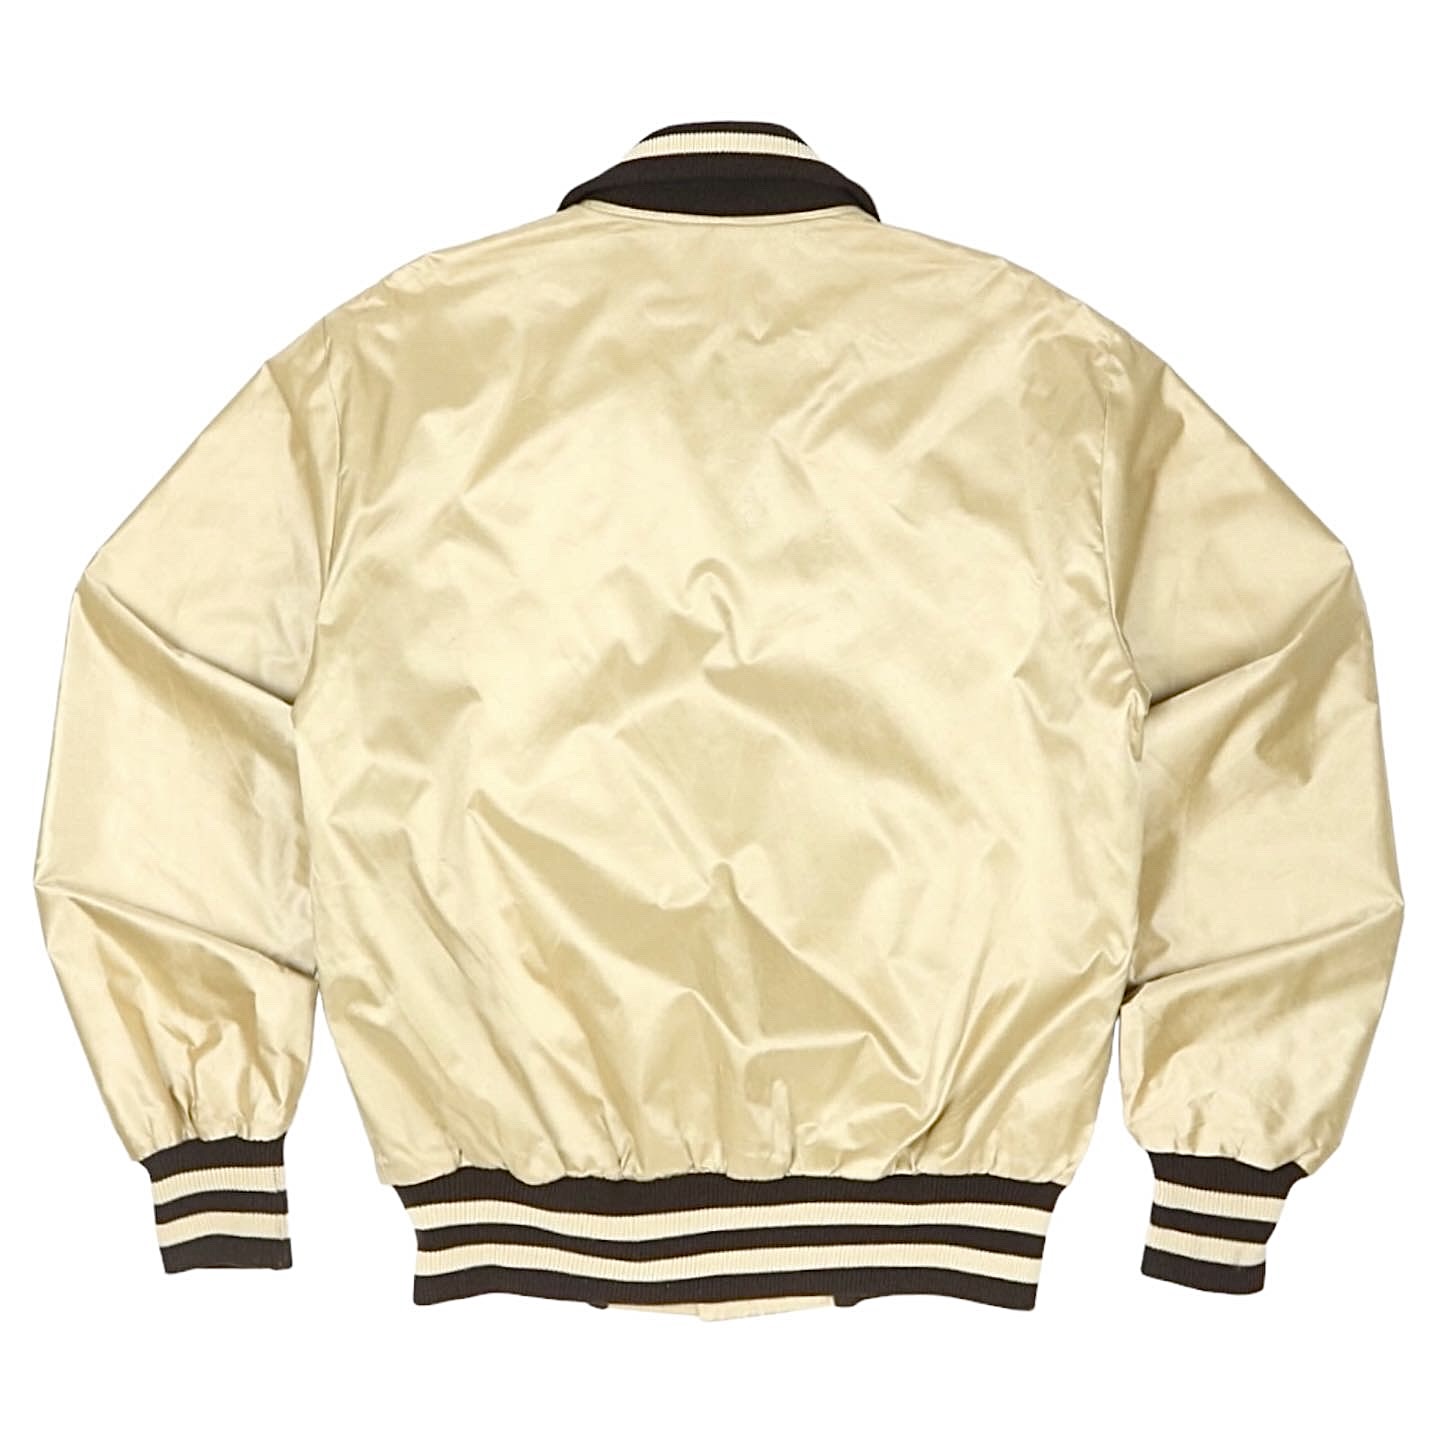 Vintage DeLONG USA Sport Jacket Size M